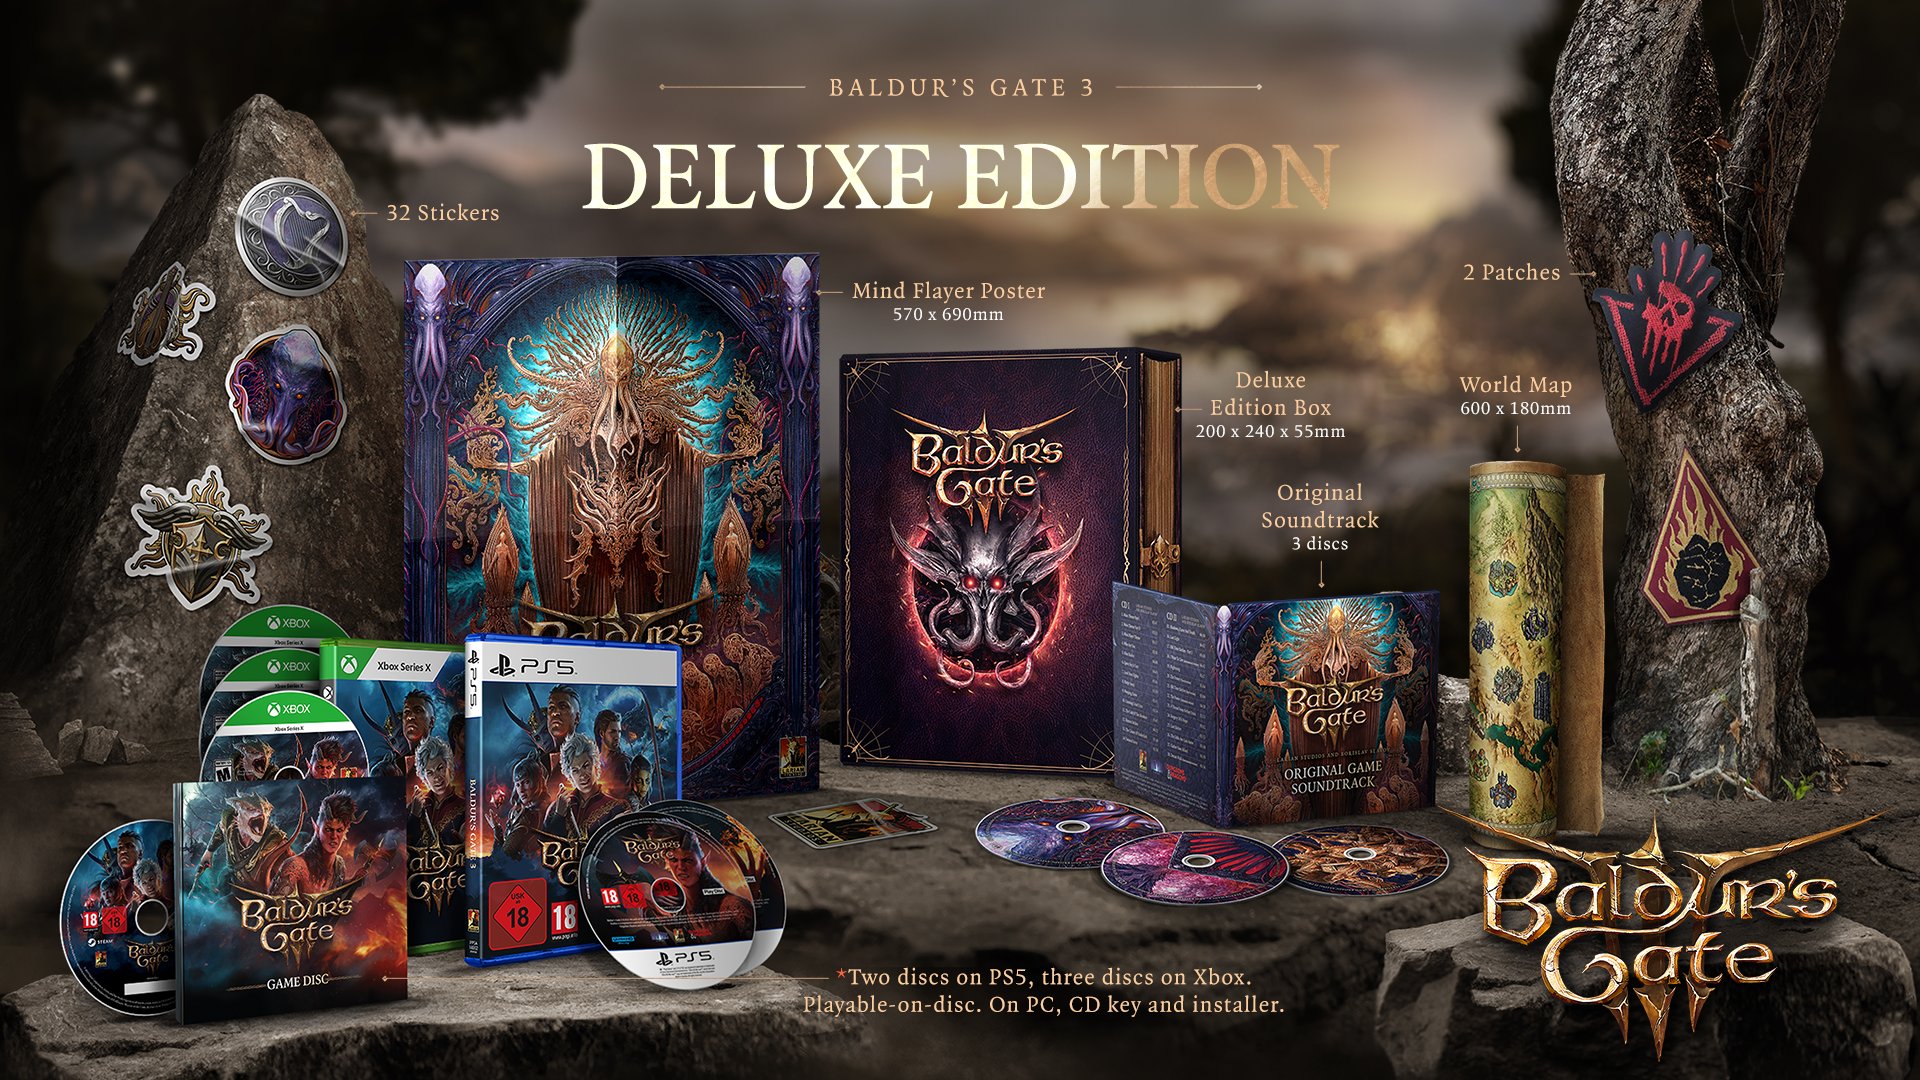 Baldur's gate 3 - deluxe edition